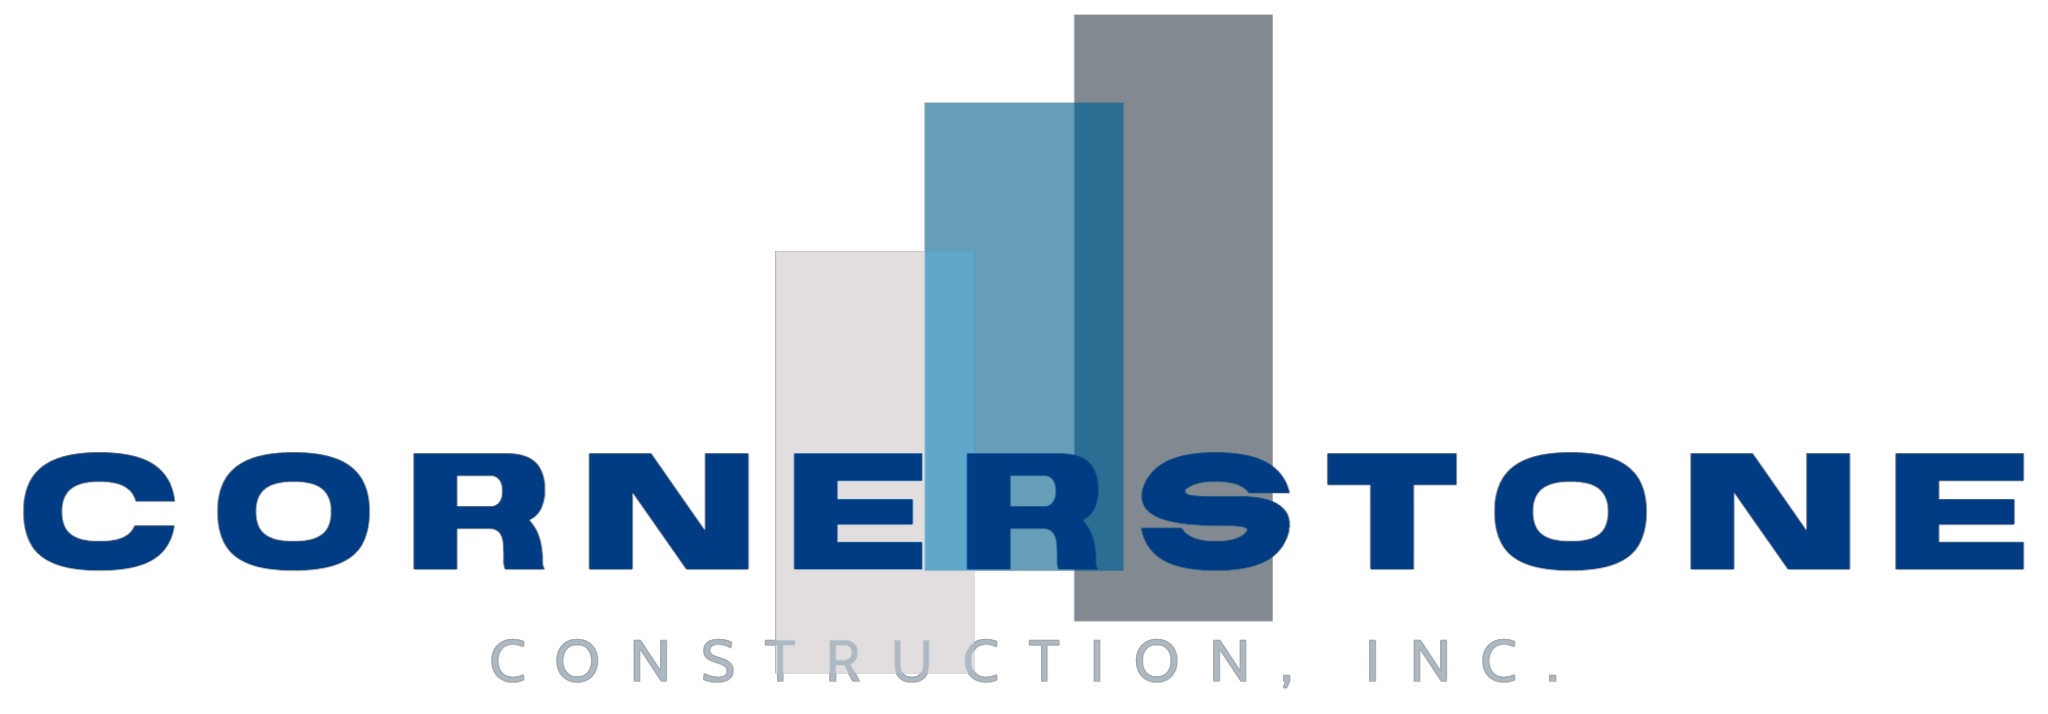 Cornerstone Construction, Inc. Logo